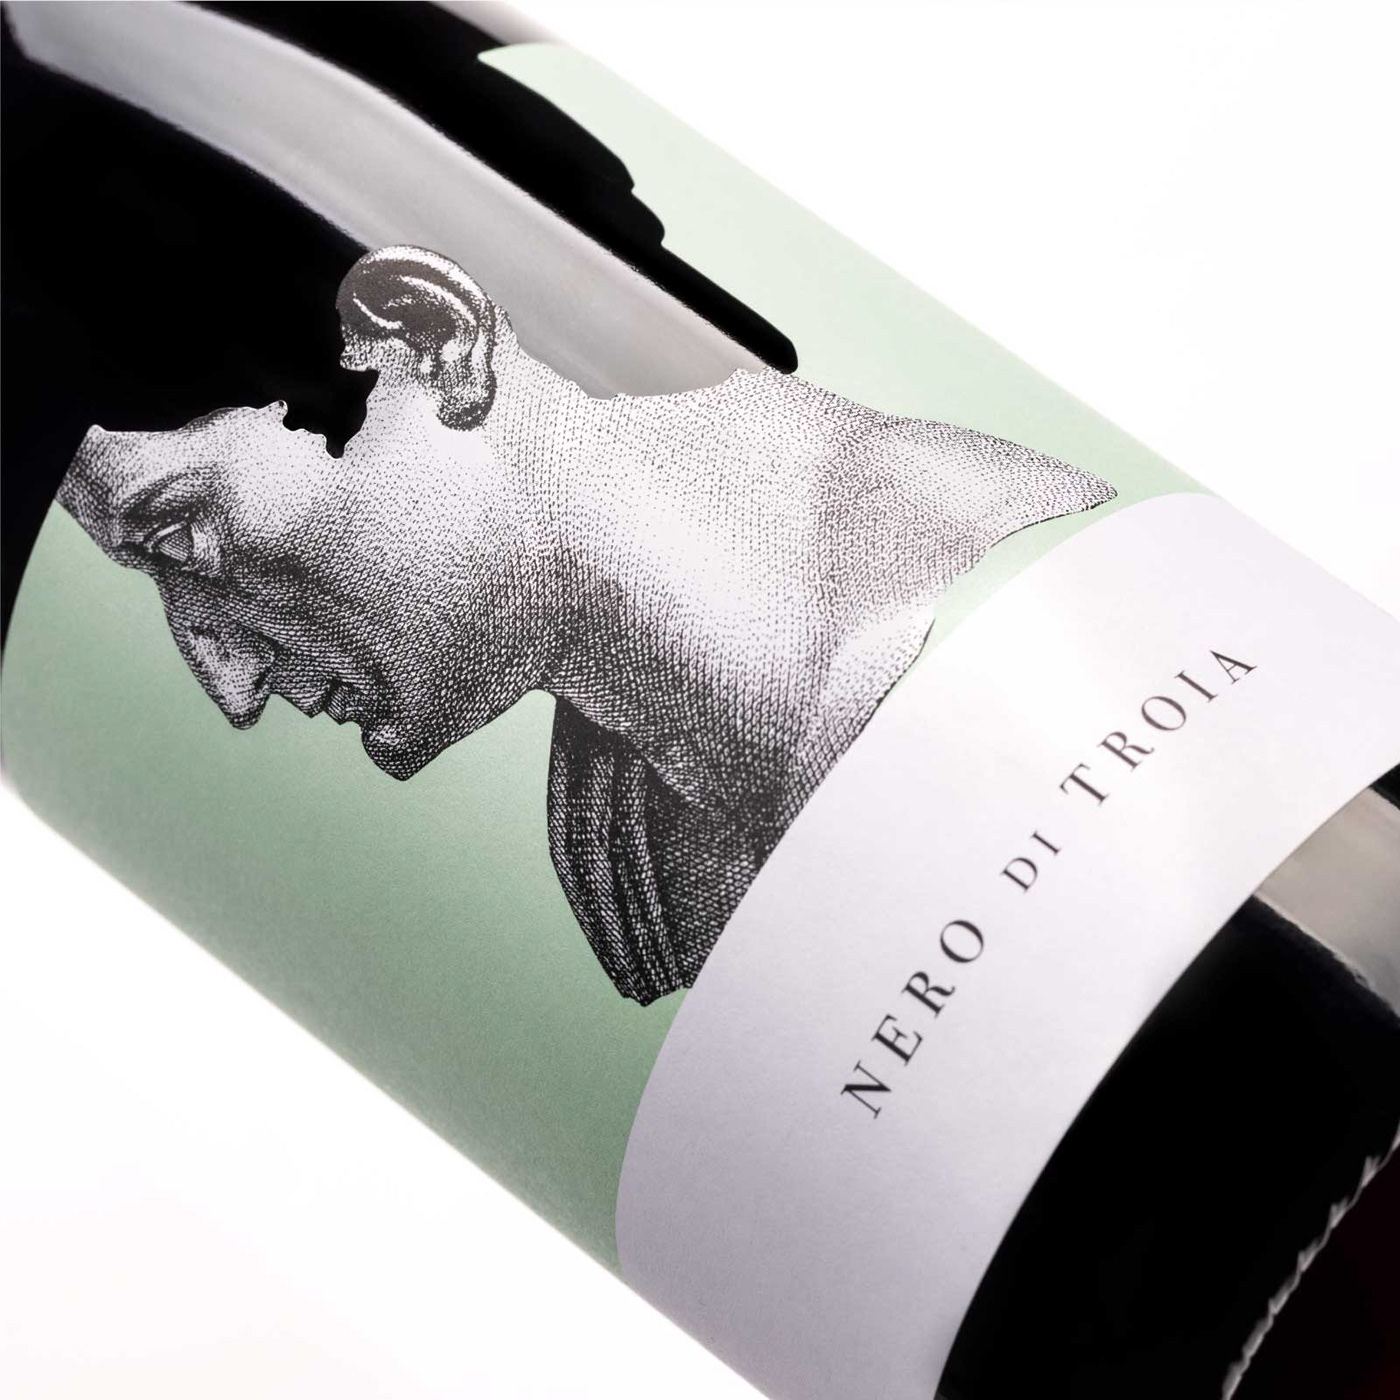 bottle brand identity design Italy Label logo Packaging wine wine label winery